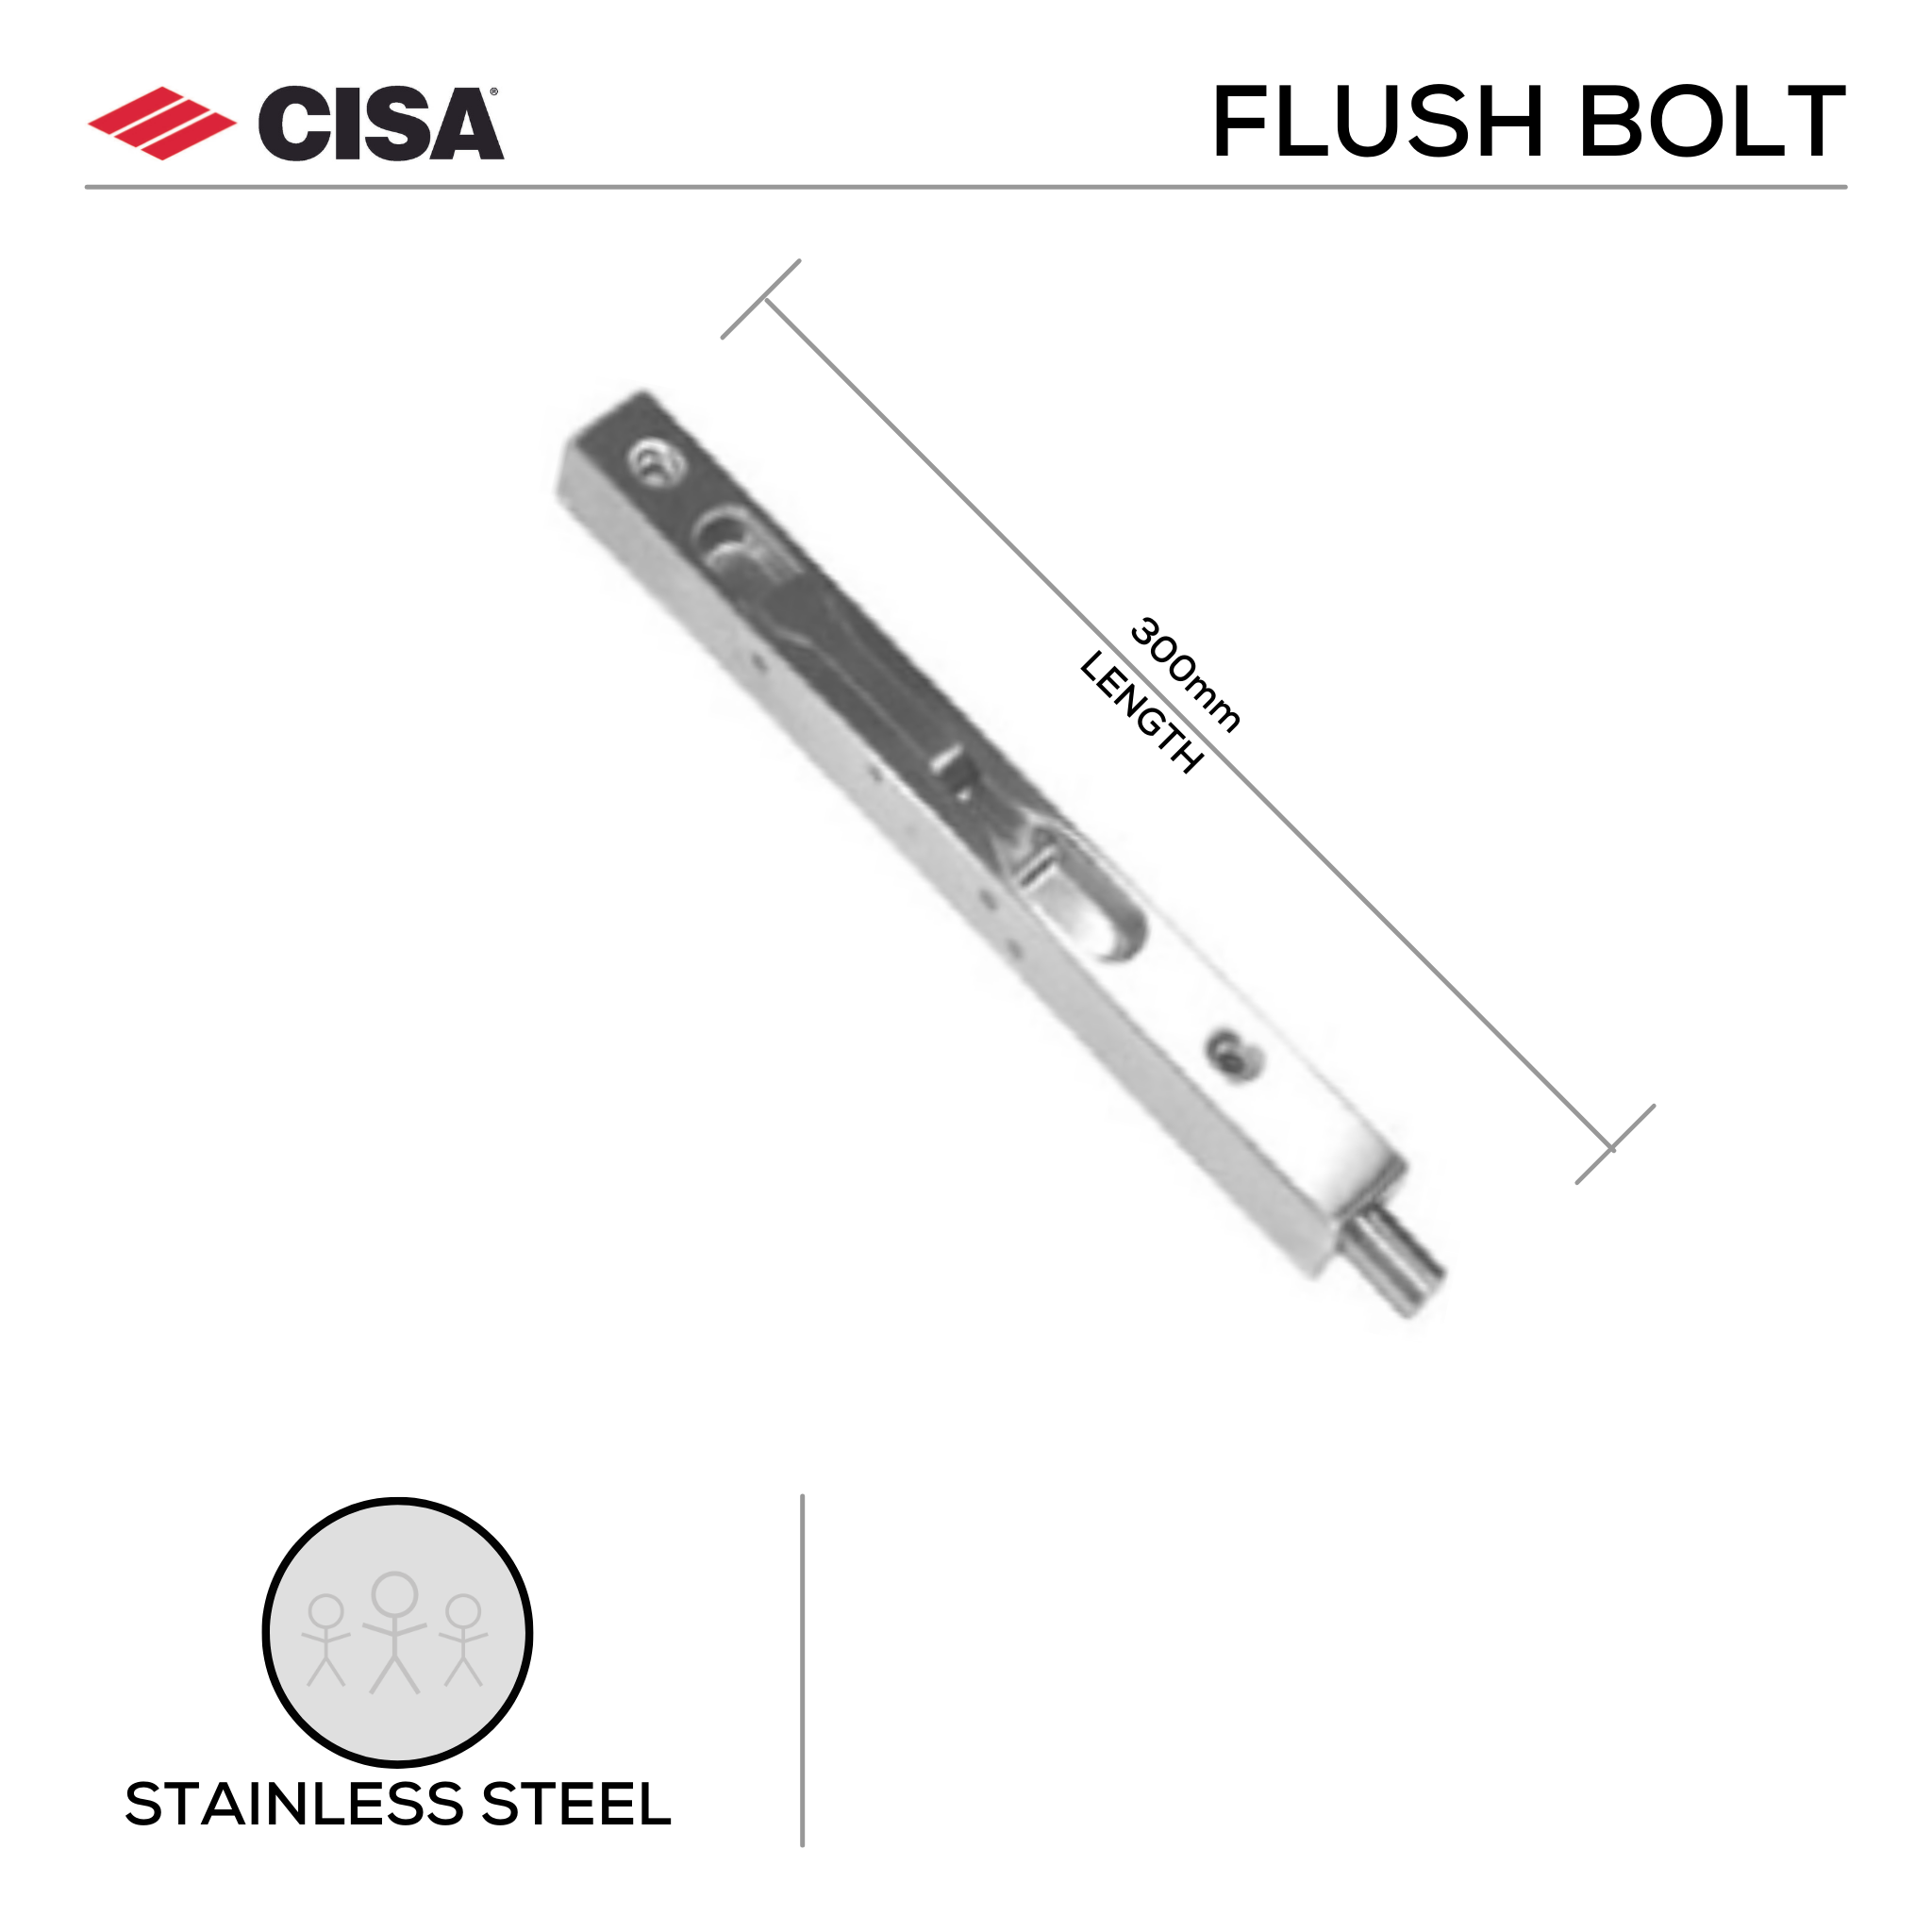 FBB300.SS, Flush Bolt, Box Type, 300mm (l) x 19mm (w), Stainless Steel, CISA